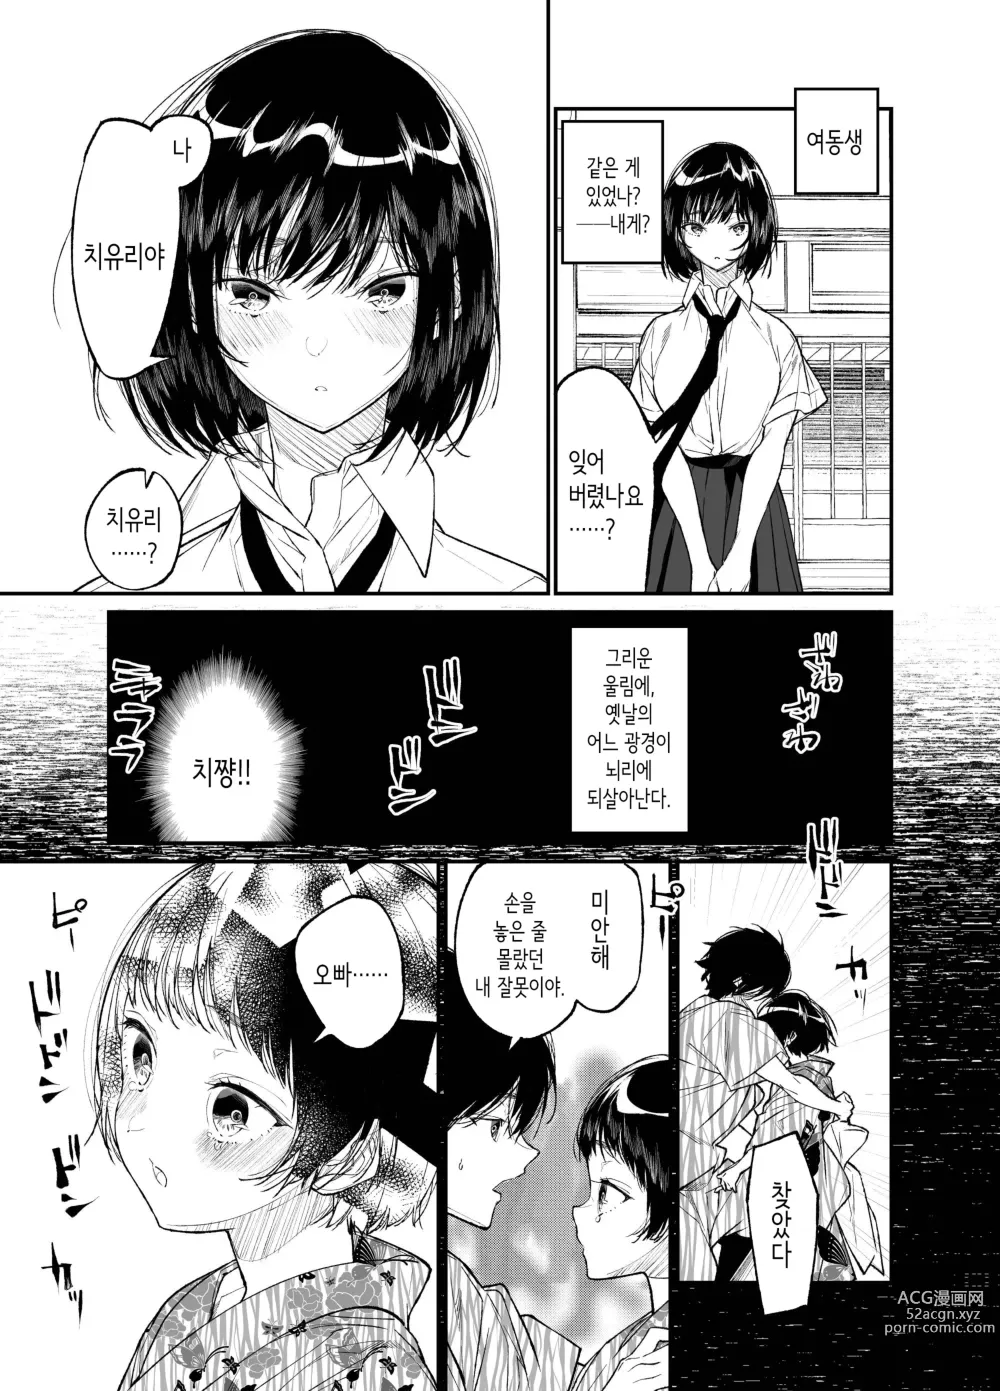 Page 5 of doujinshi 여름, 소녀는 불길 속에 뛰어든다.